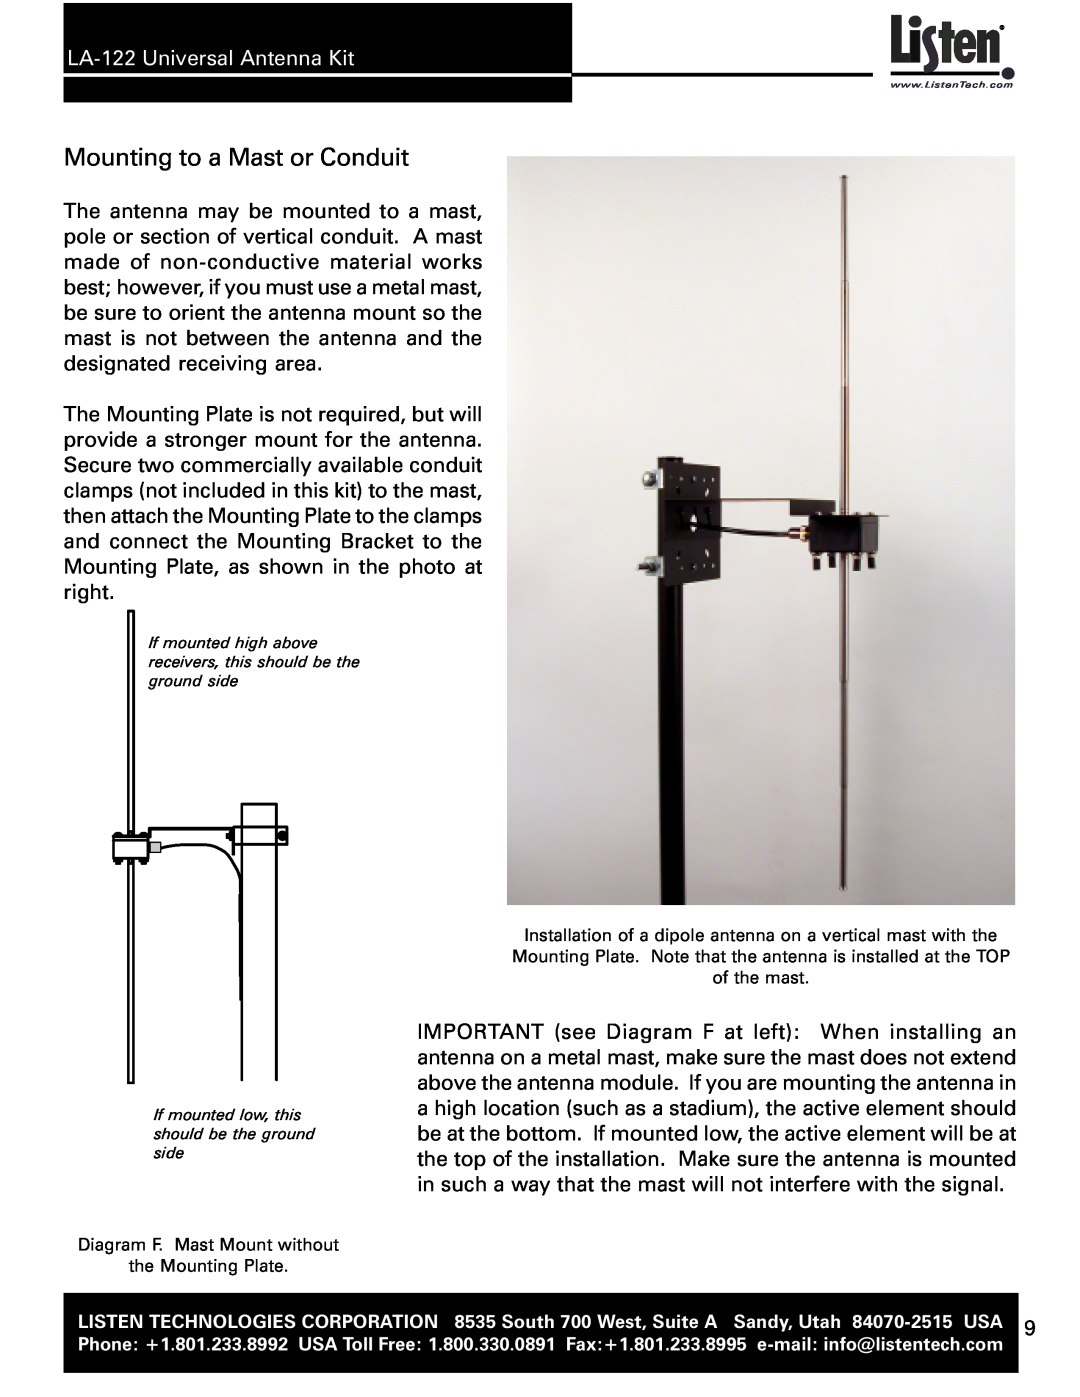 Listen Technologies user manual Mounting to a Mast or Conduit, LA-122Universal Antenna Kit 